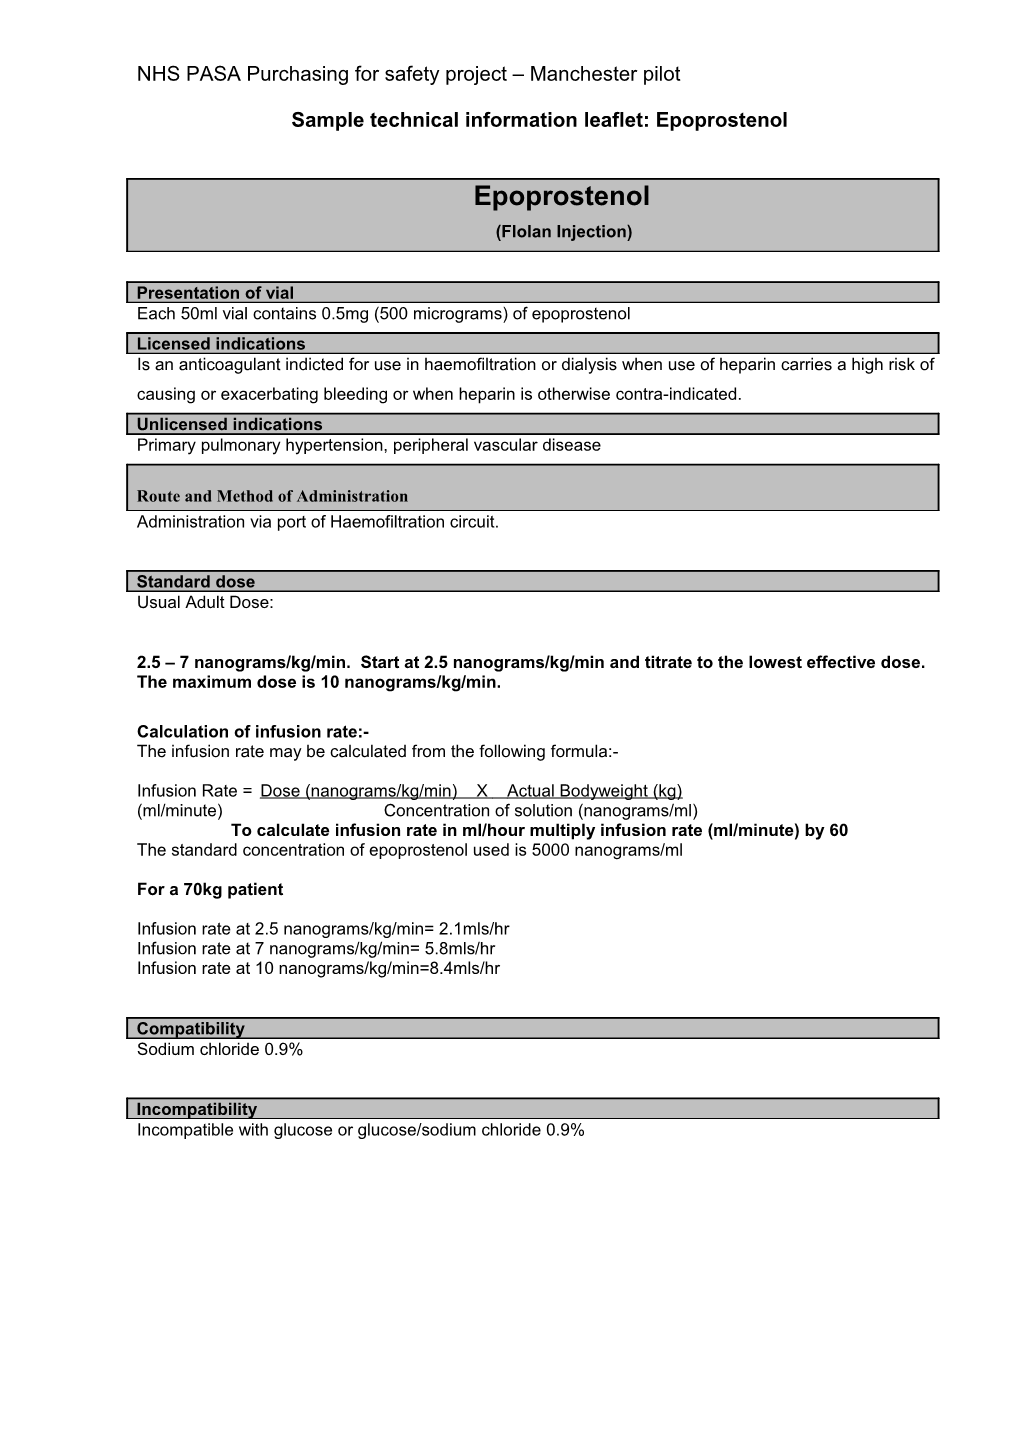 Sample Technical Information Leaflet: Epoprostenol